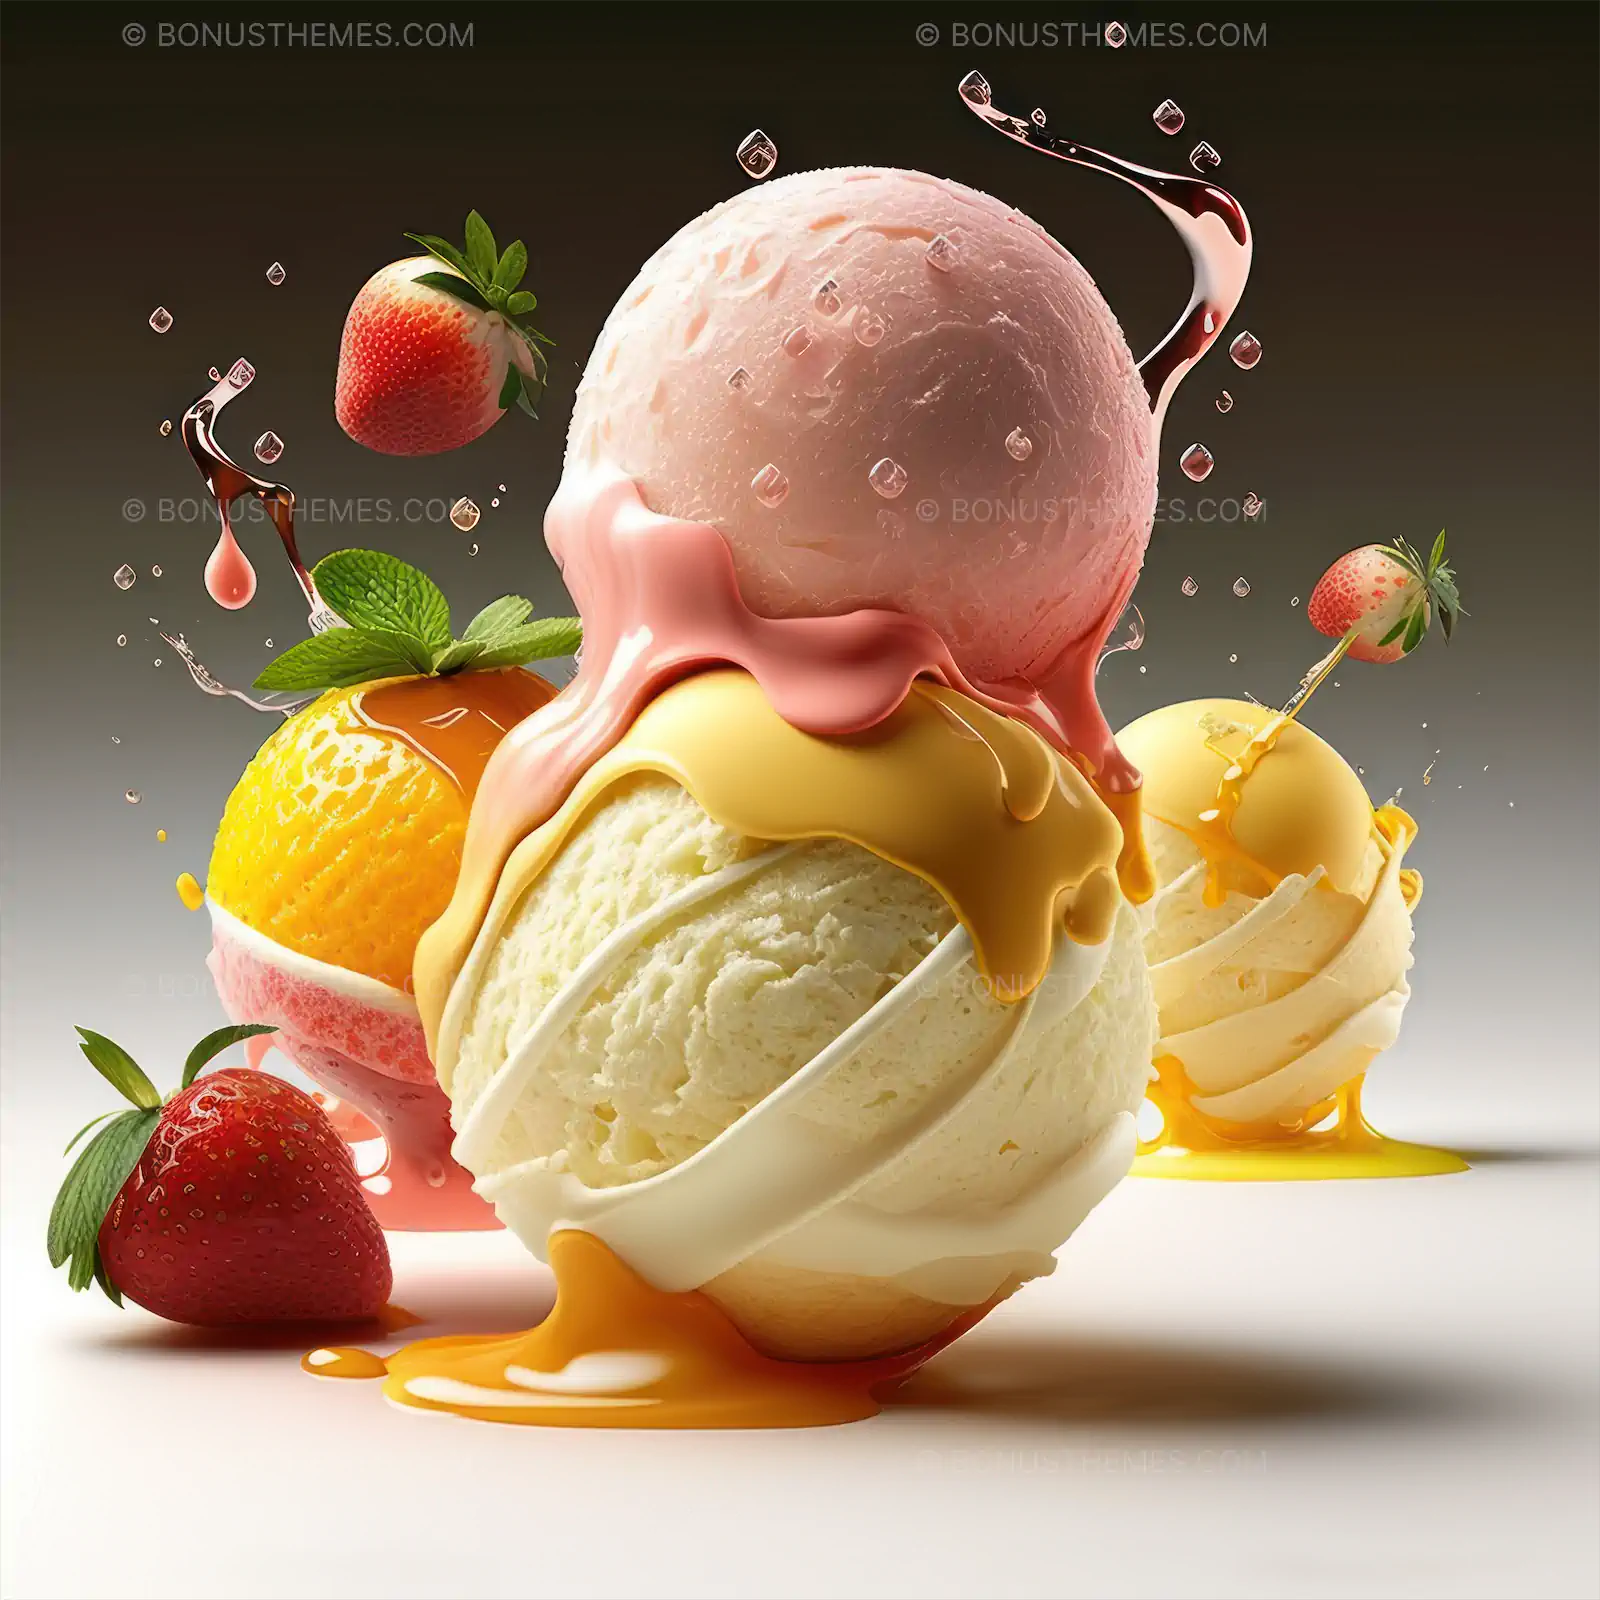 Ice cream balls with fruits